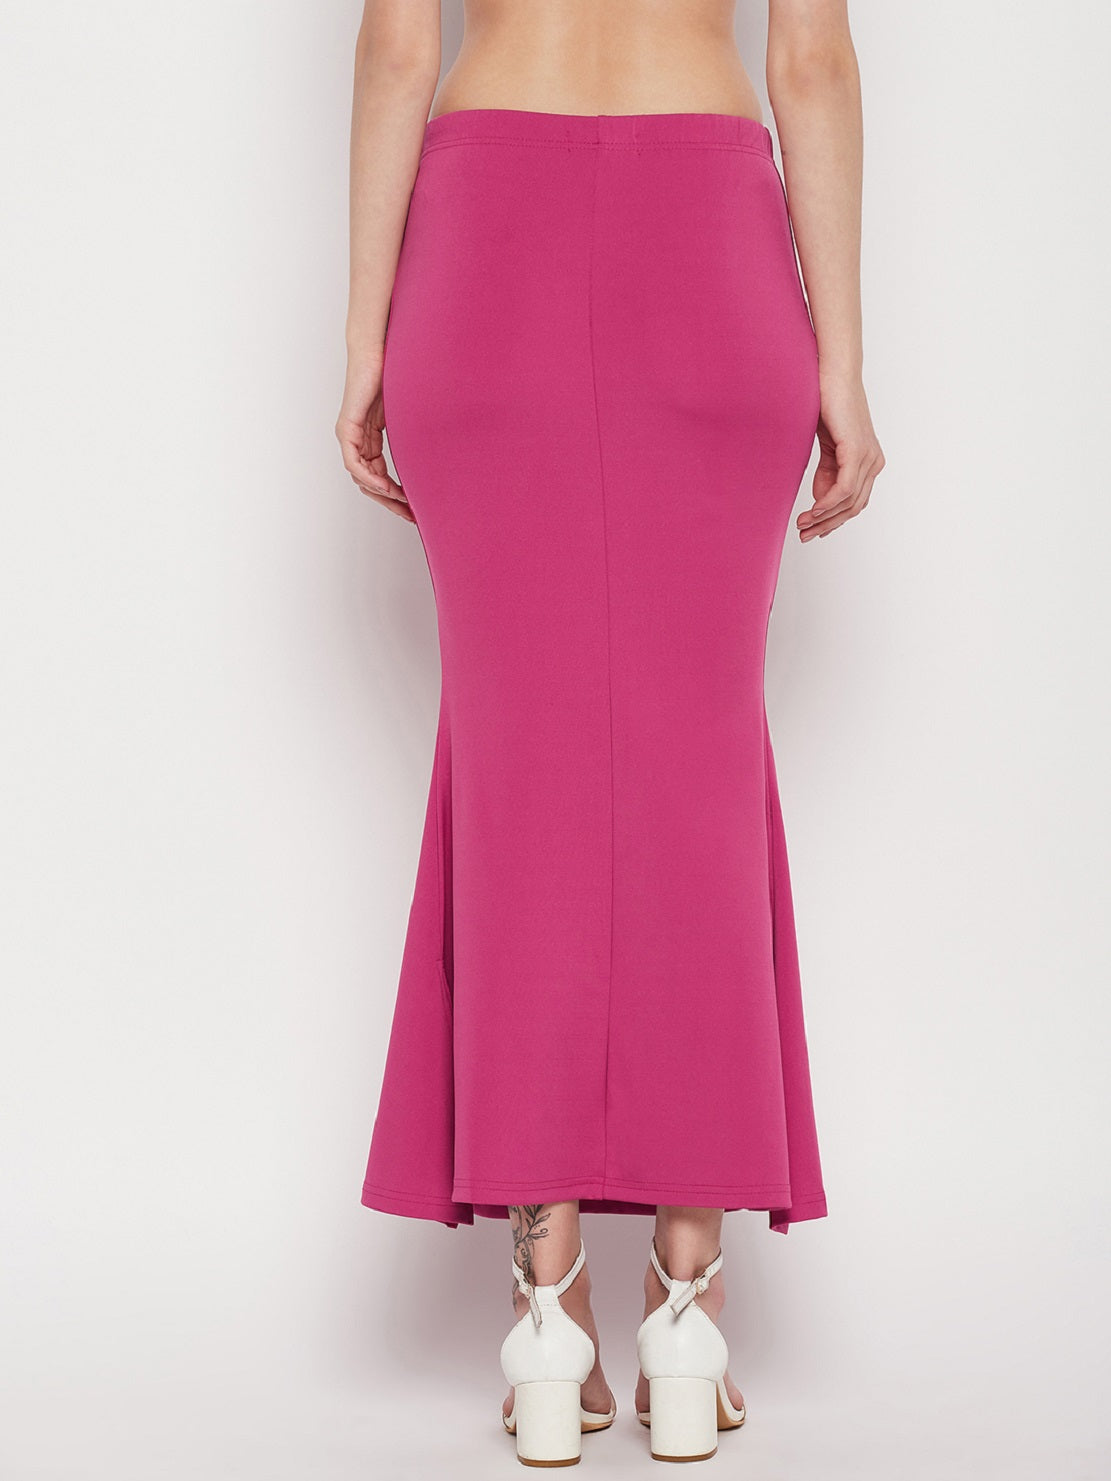 vaitan Saree Petticoat Shapewear 2Pc Combo Grey Pink Lycra Blend